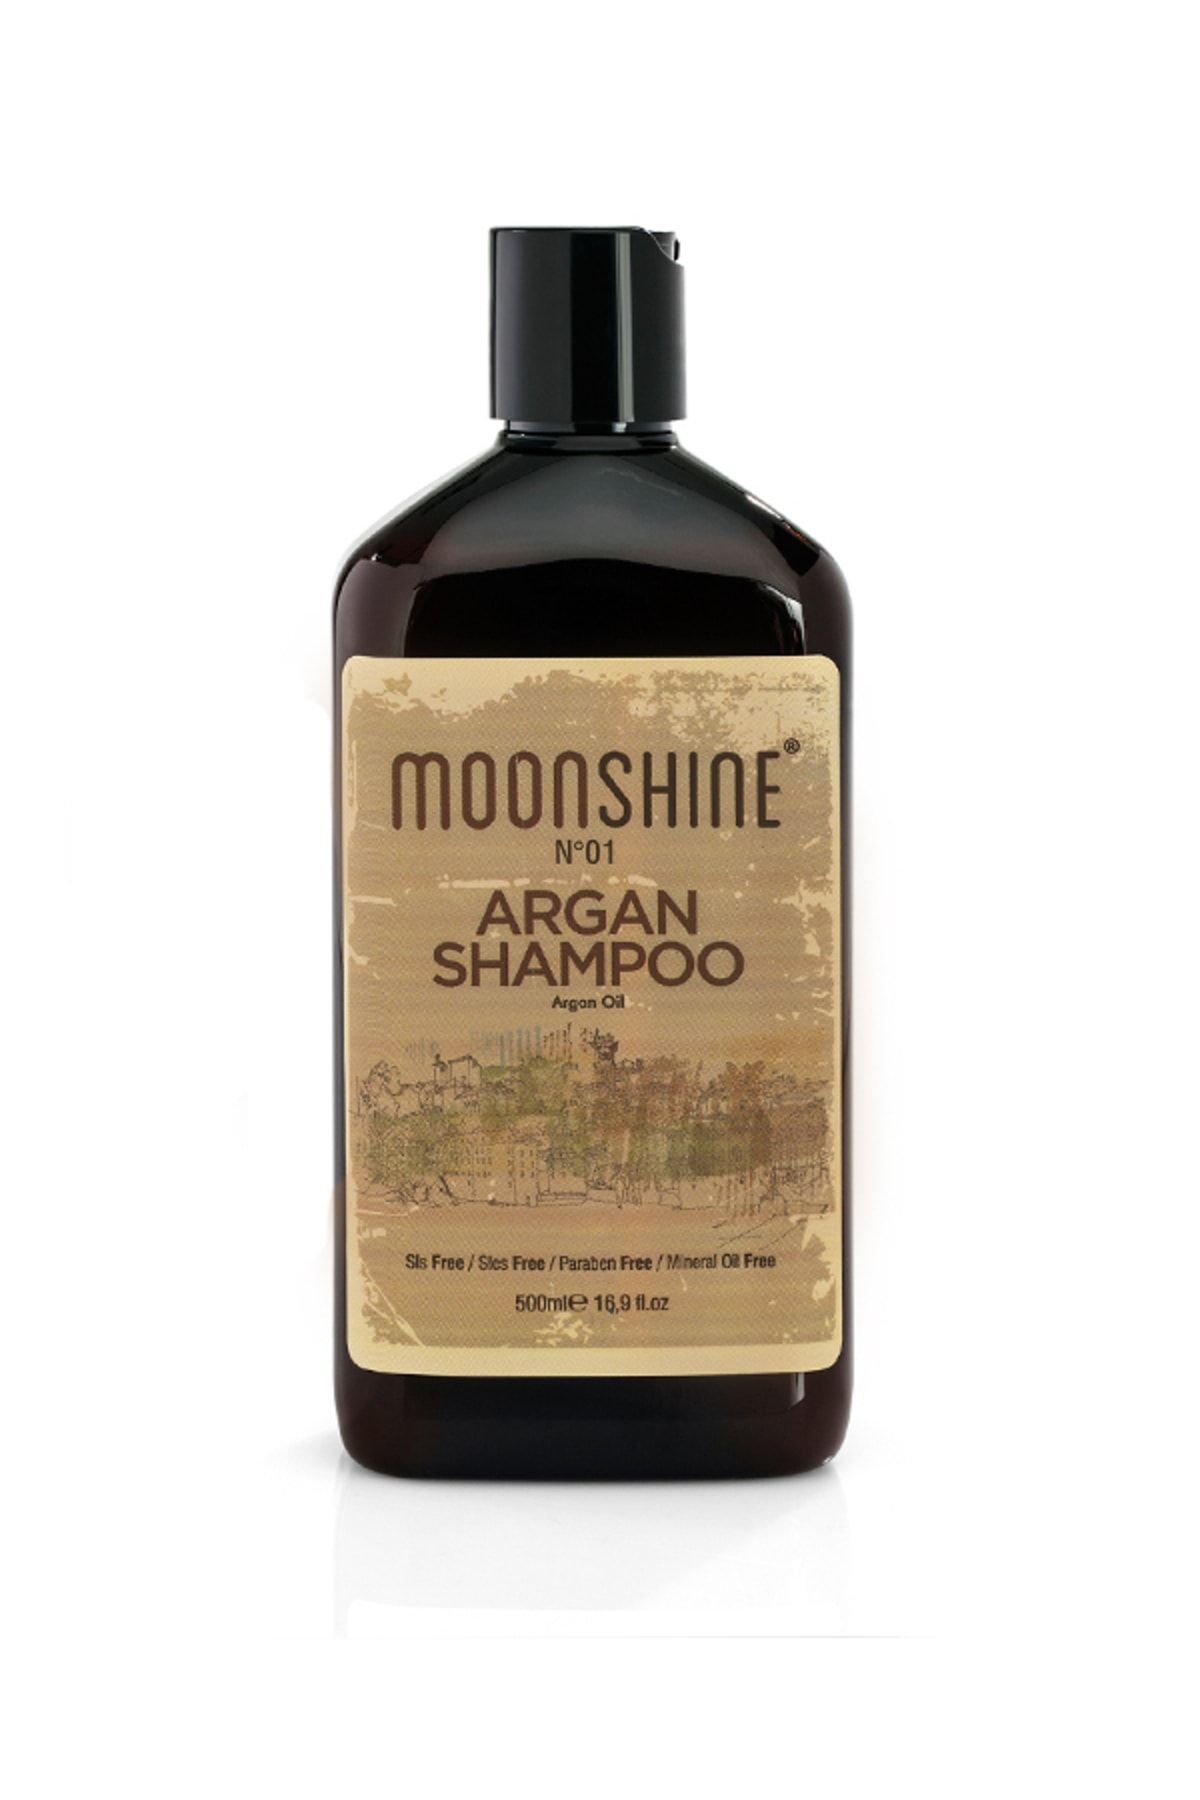 moonshine Argan Shampoo 500ml